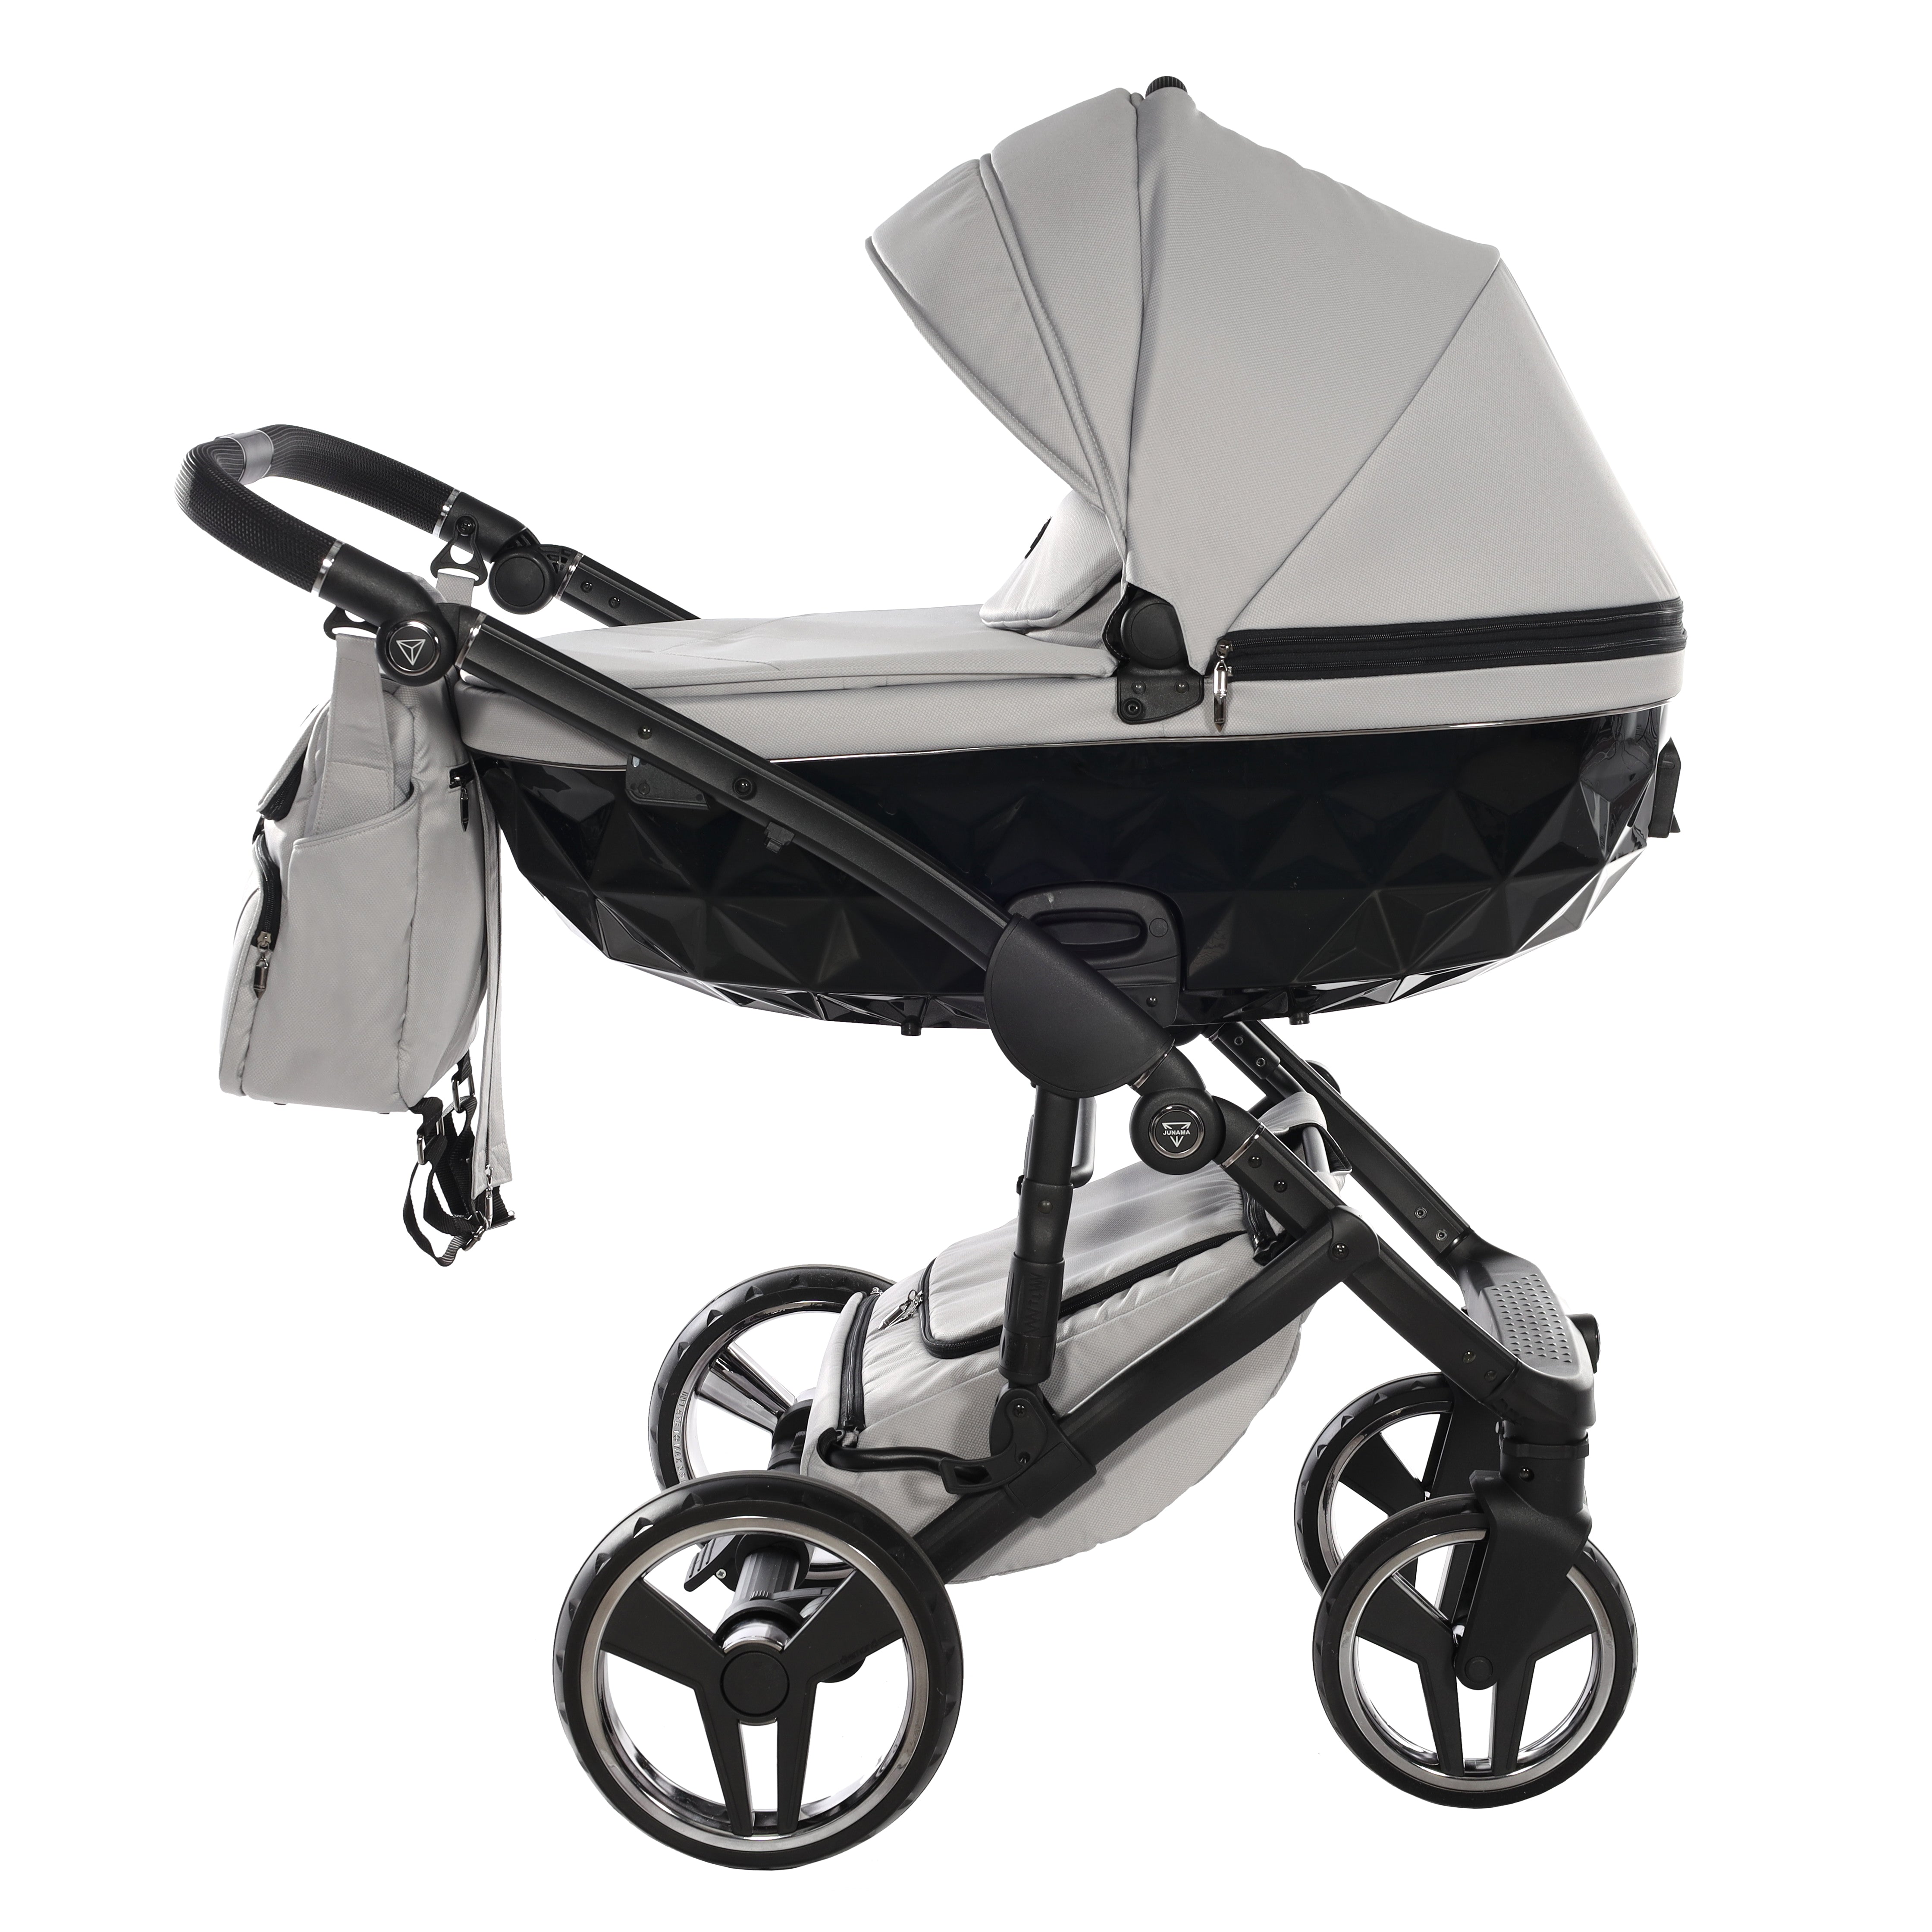 Junama BASIC, baby stroller and bassinet 2 in 1 - LIGHT GRAY, Code number: JUNBSC06